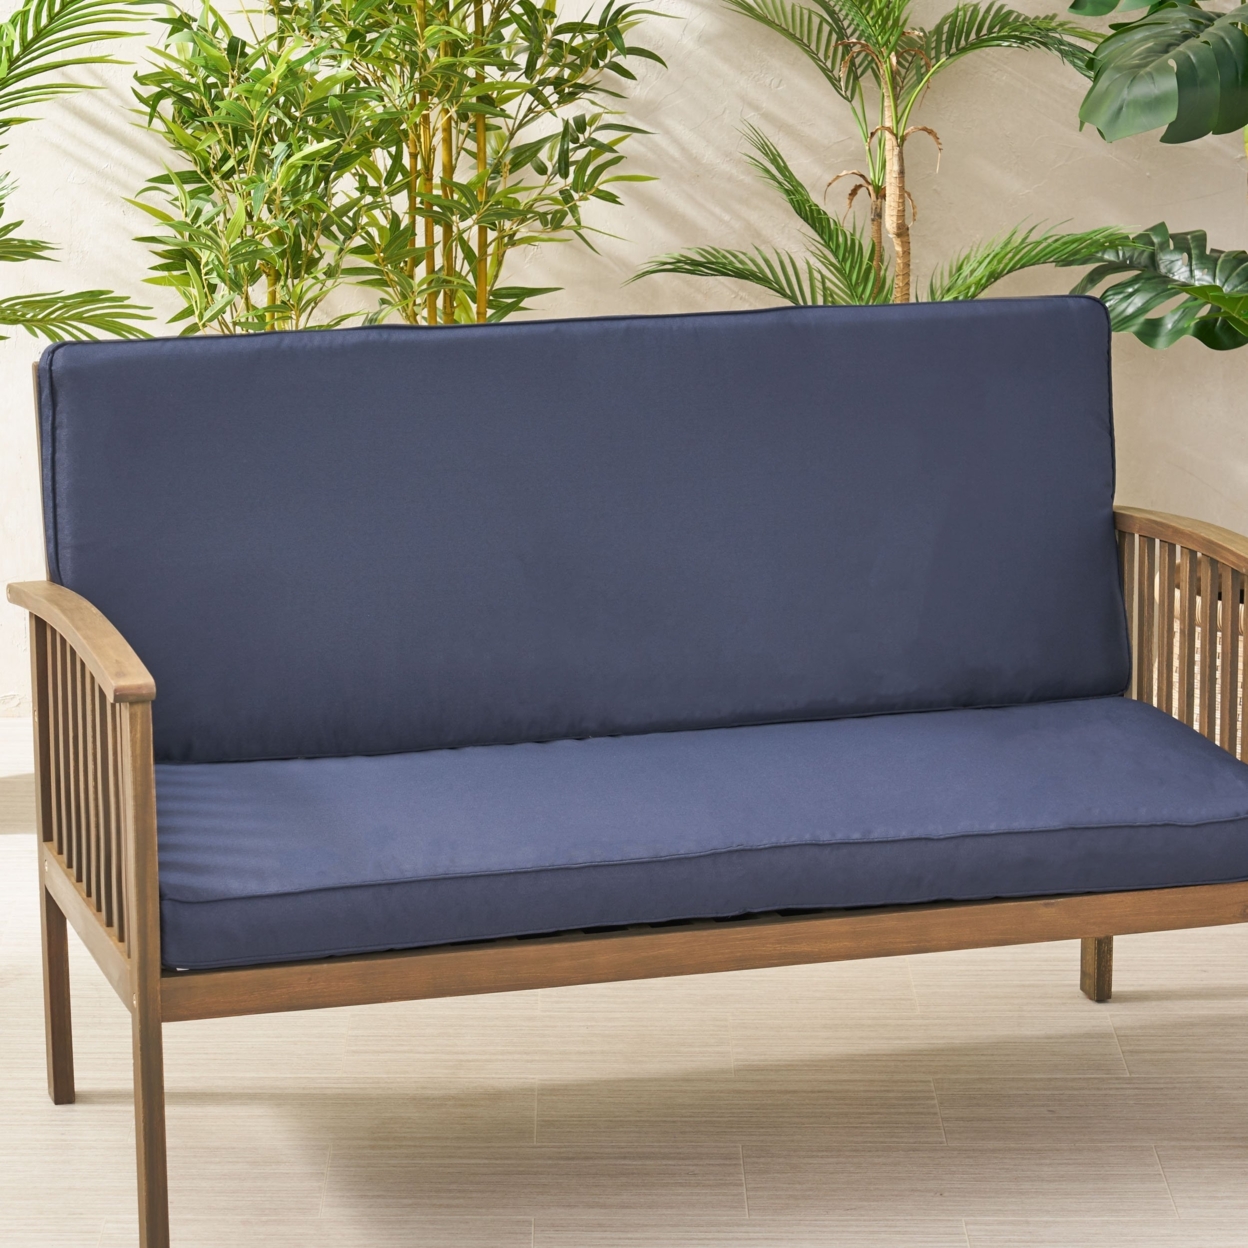 Eydan Outdoor Water Resistant Fabric Loveseat Cushions - Navy Blue